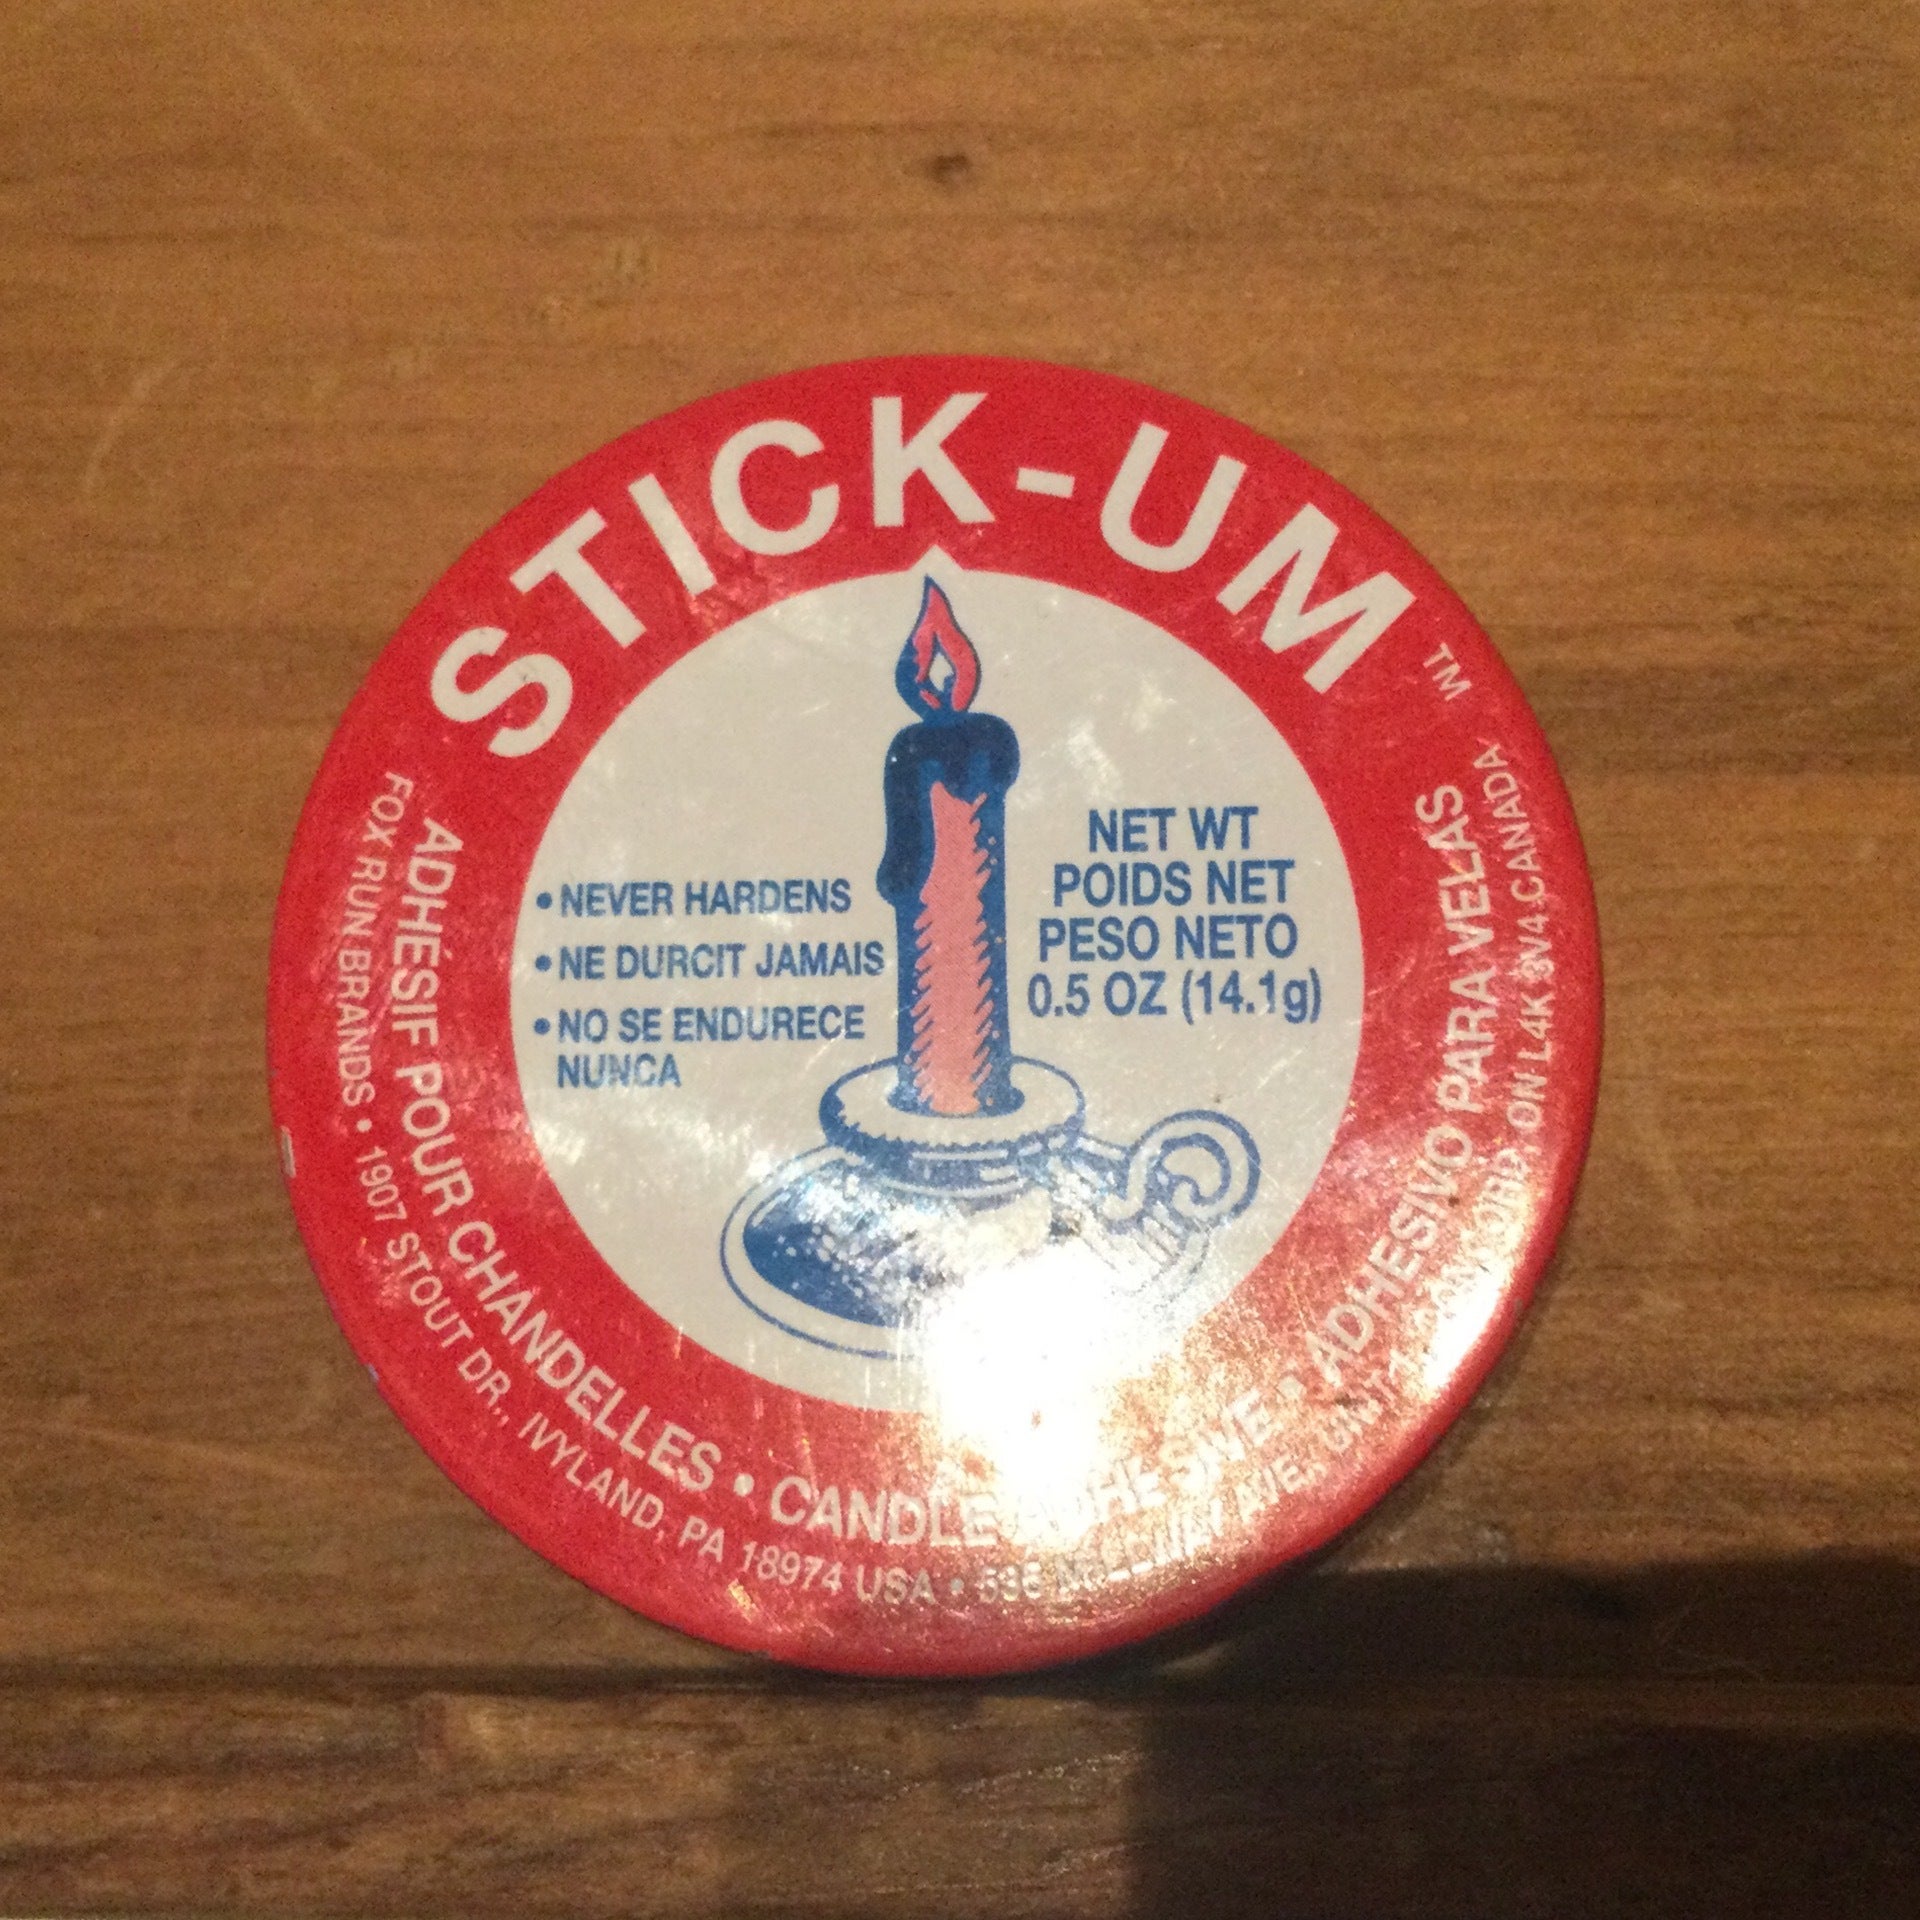 Stick-Um Glue Candle Adhesive